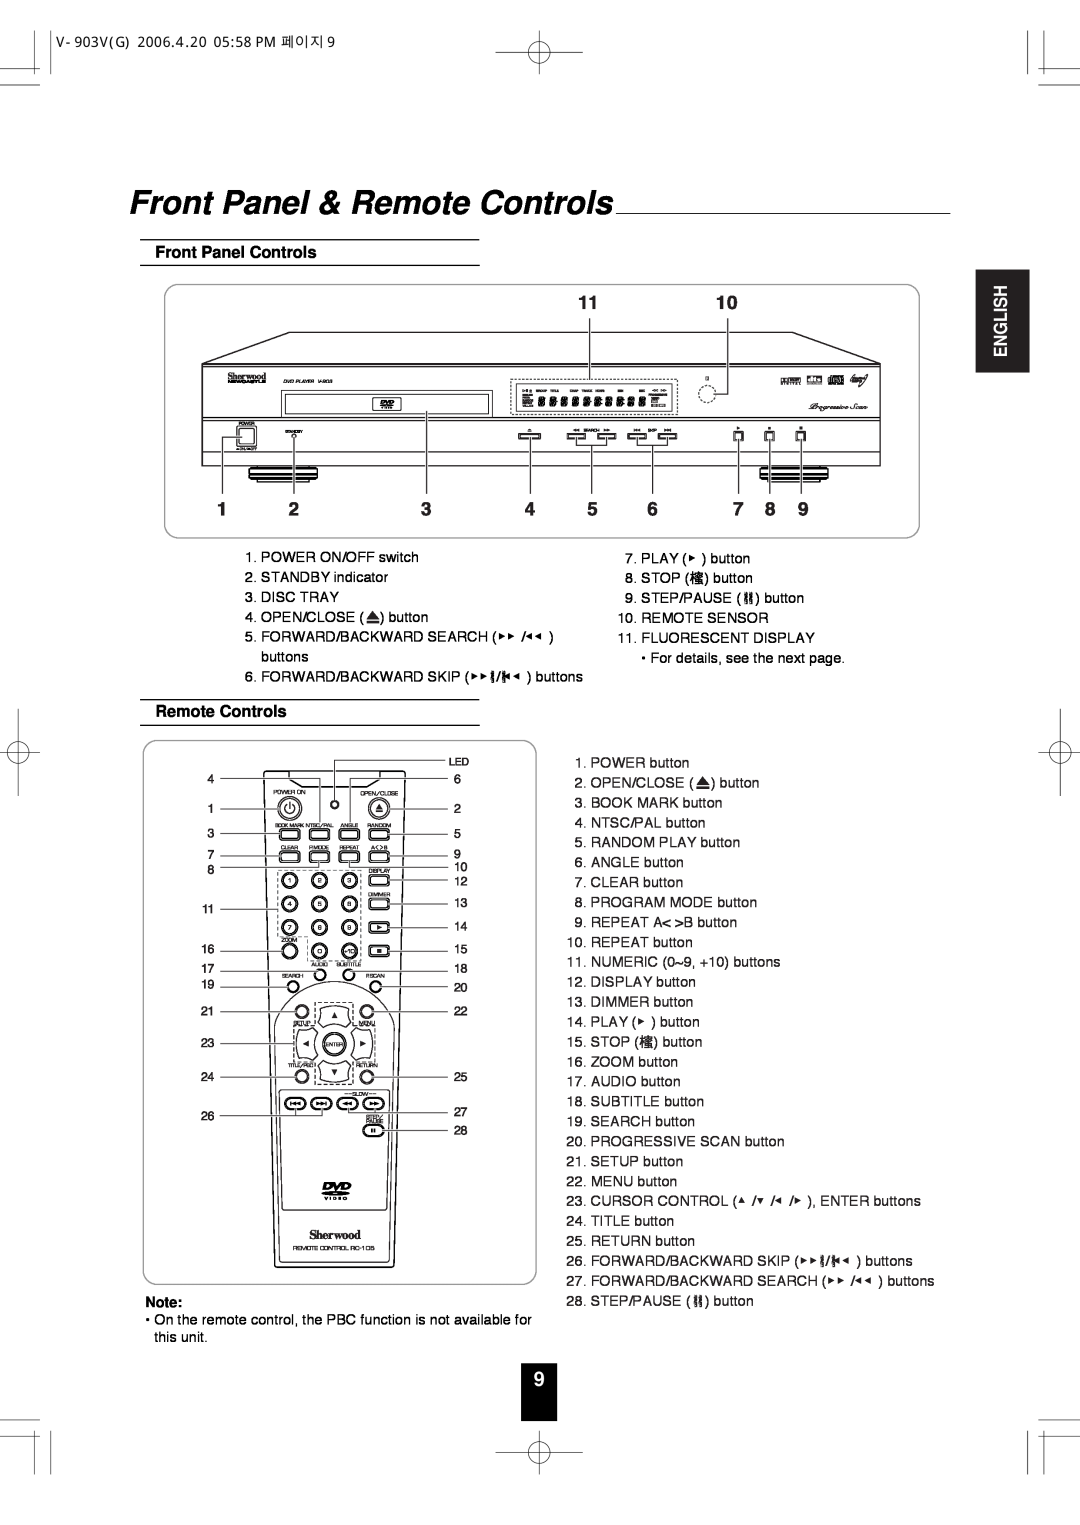 Sherwood V-903 manual Front Panel & Remote Controls, Front Panel Controls, English 